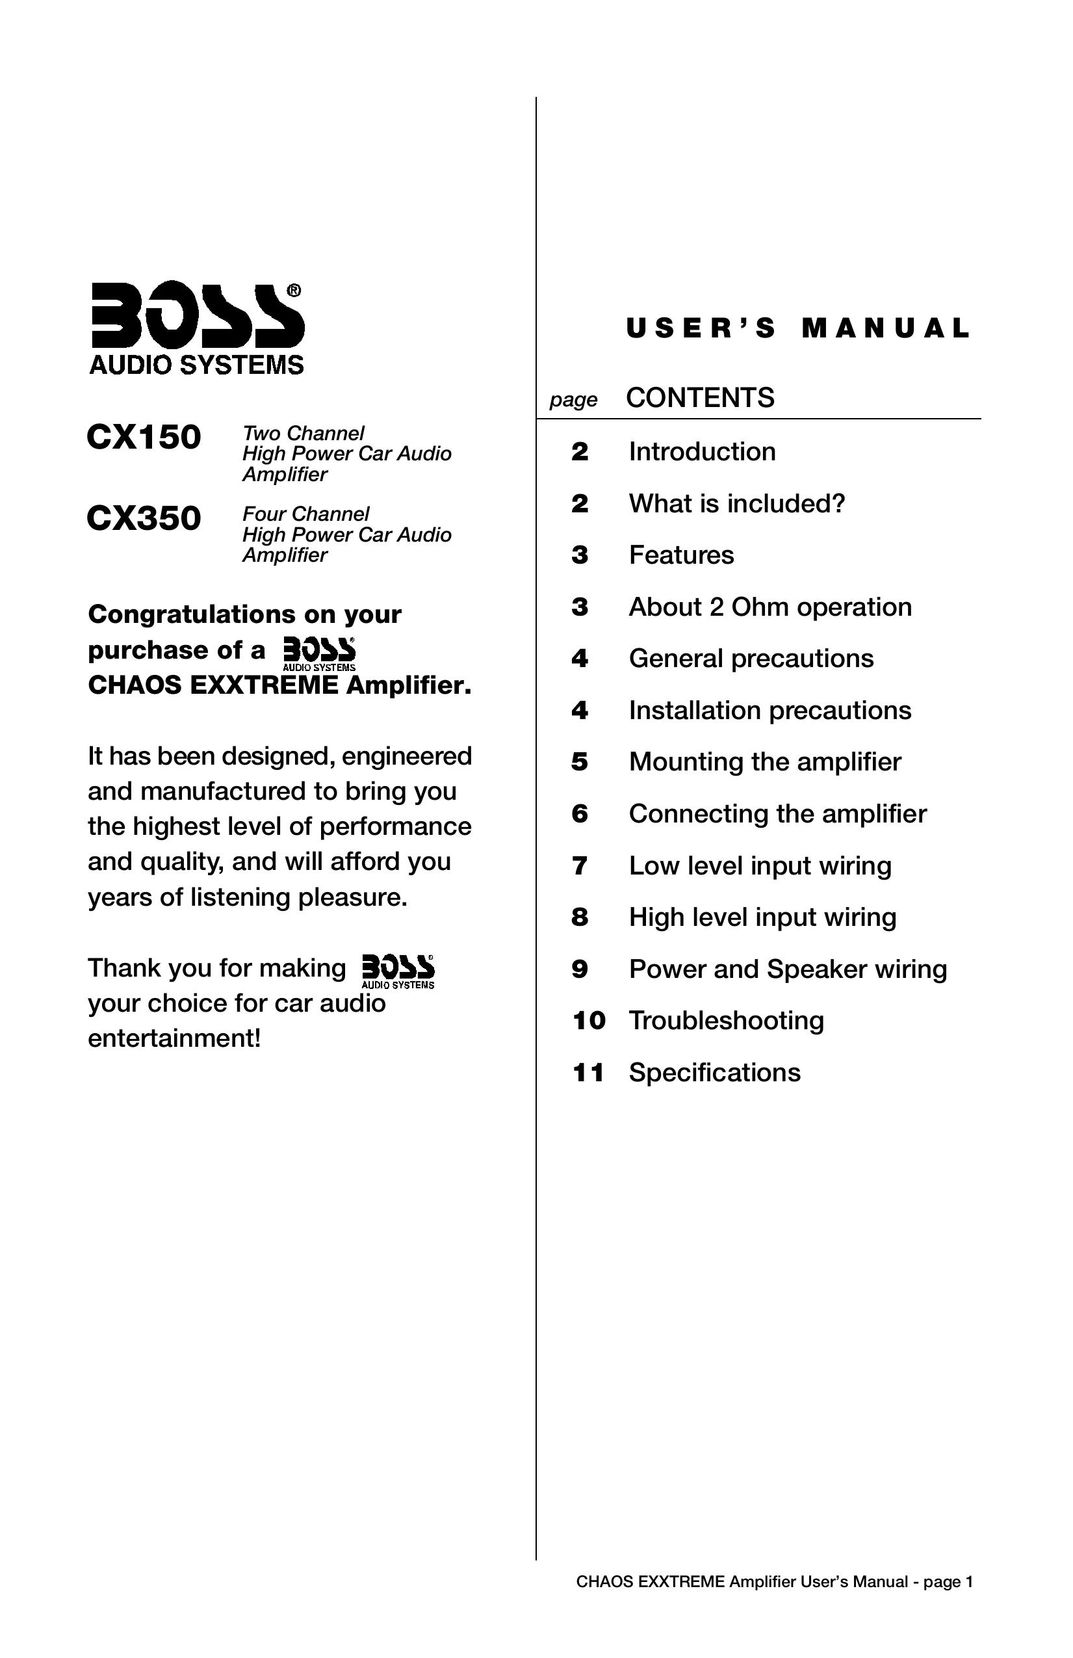 Boss Audio Systems CX150 Car Amplifier User Manual